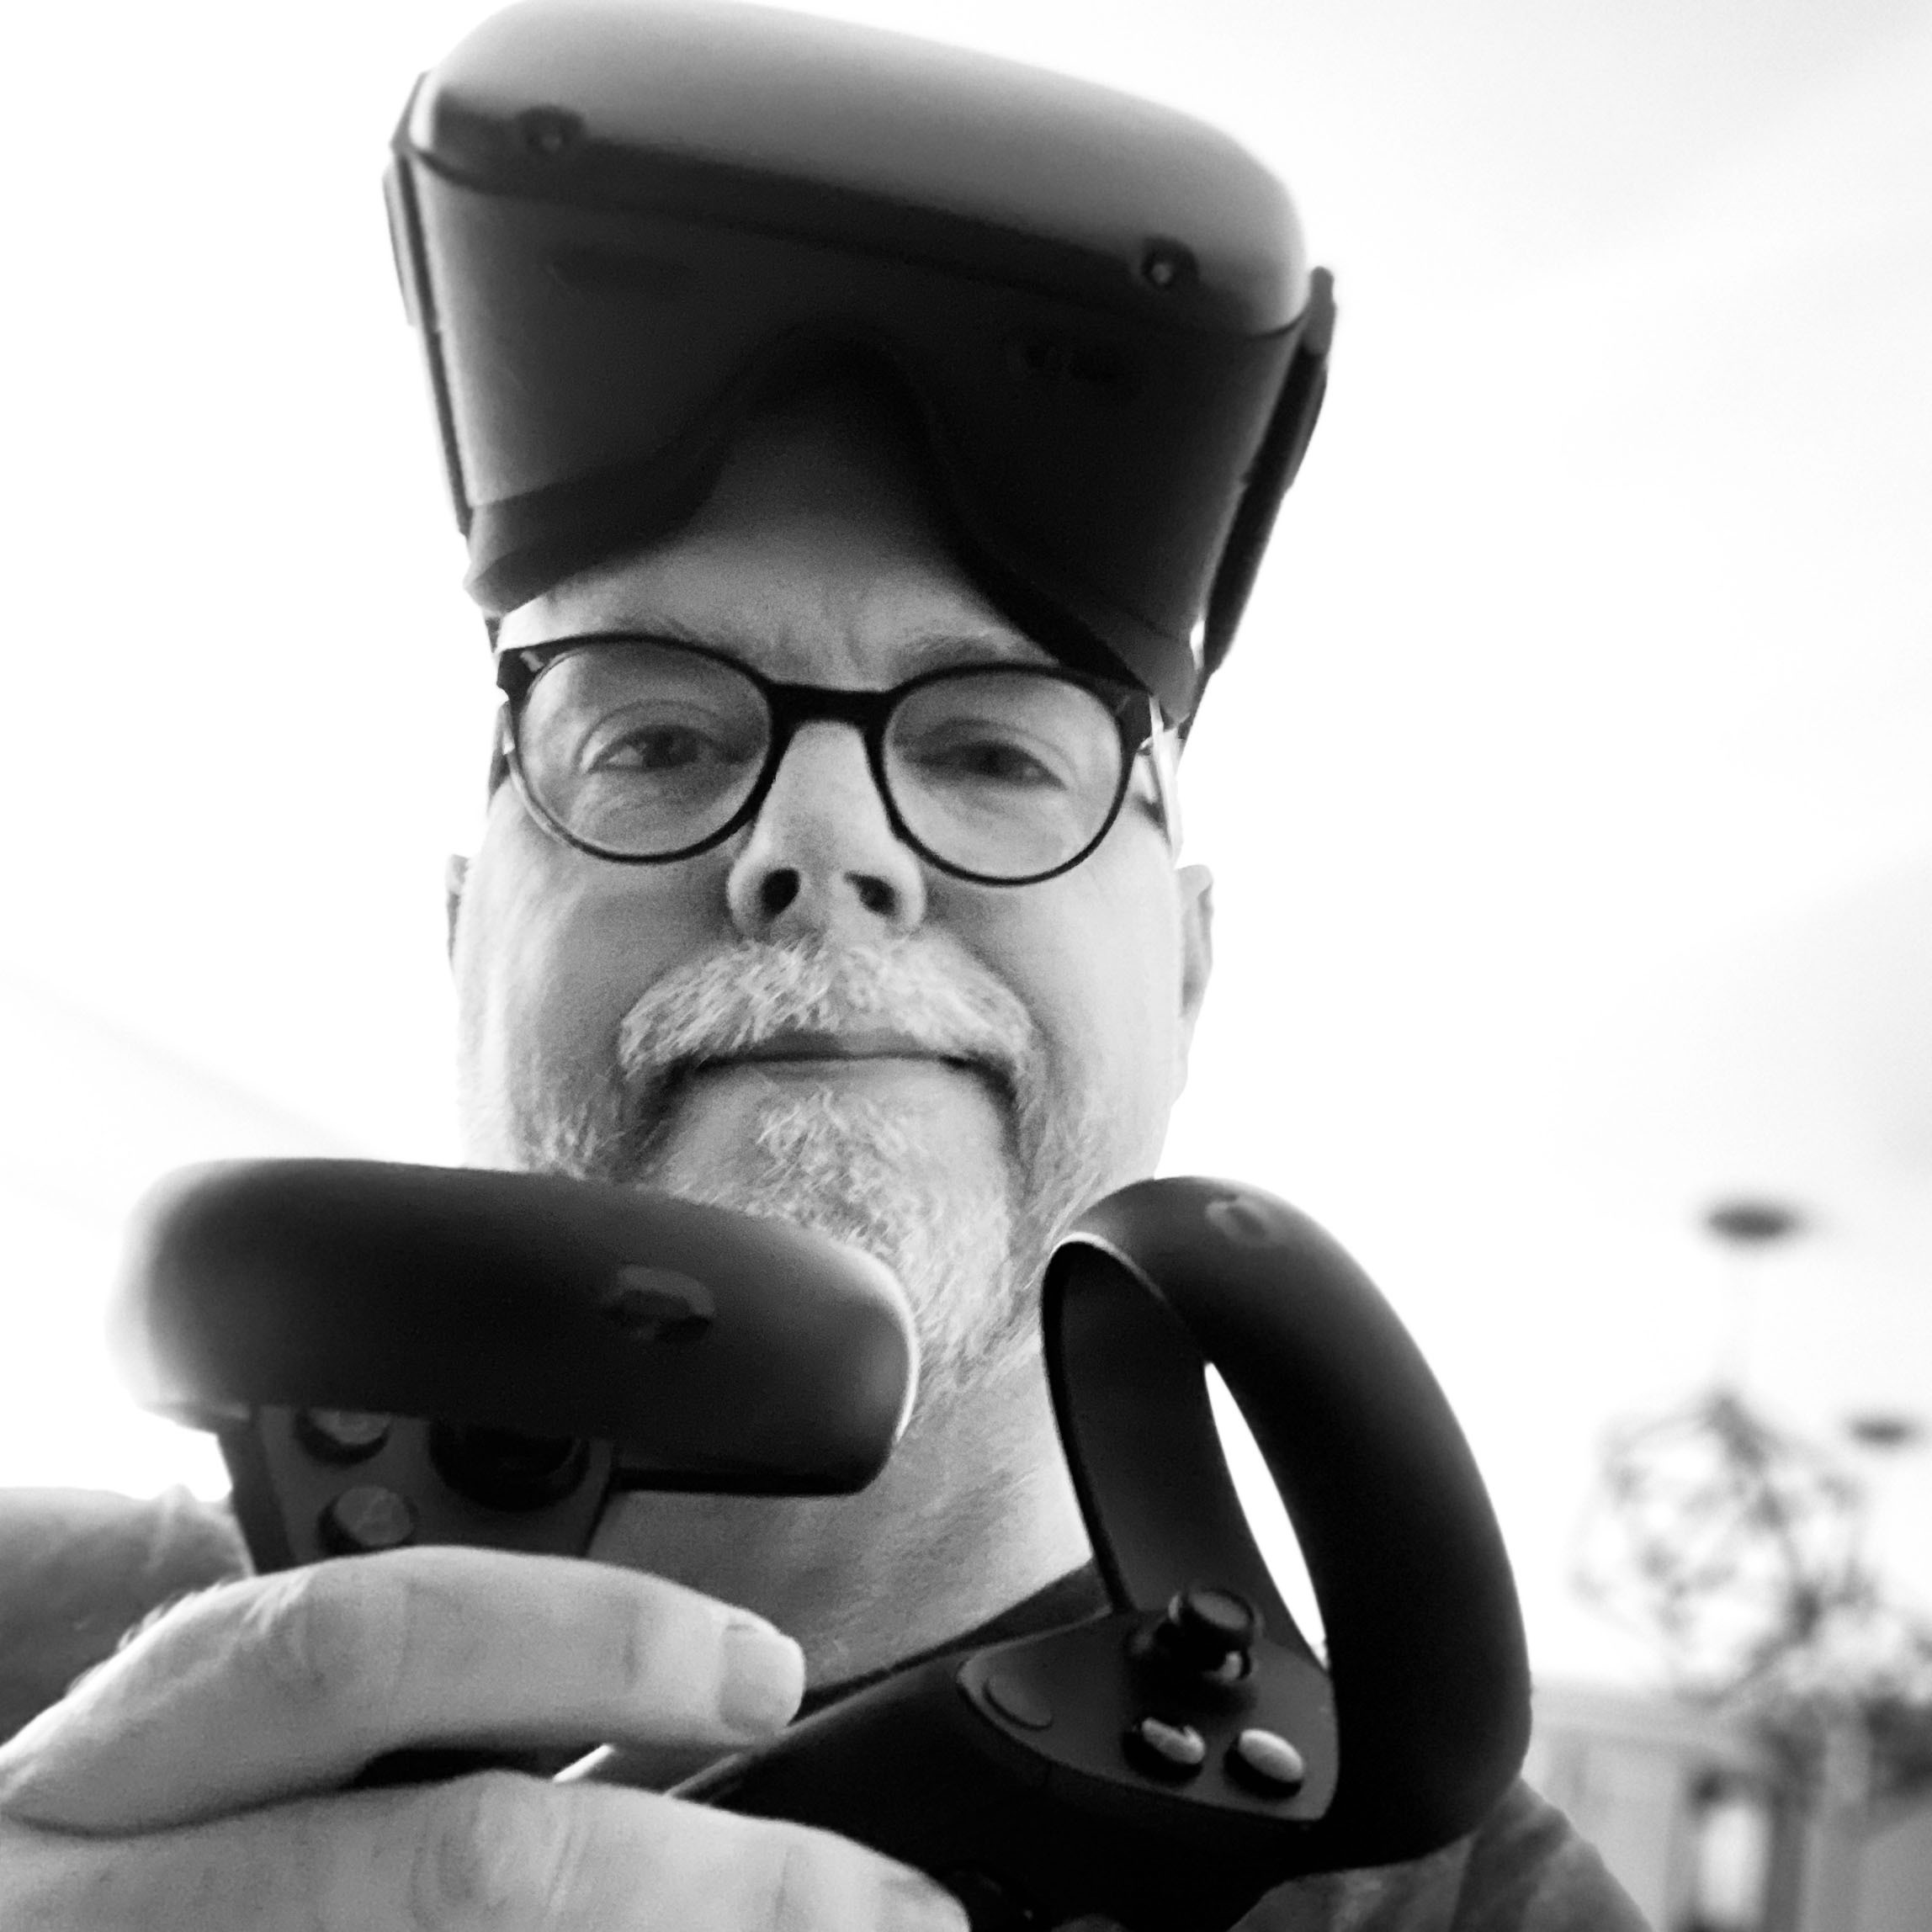 Tom Hall, Resolution Games - VR Headshot